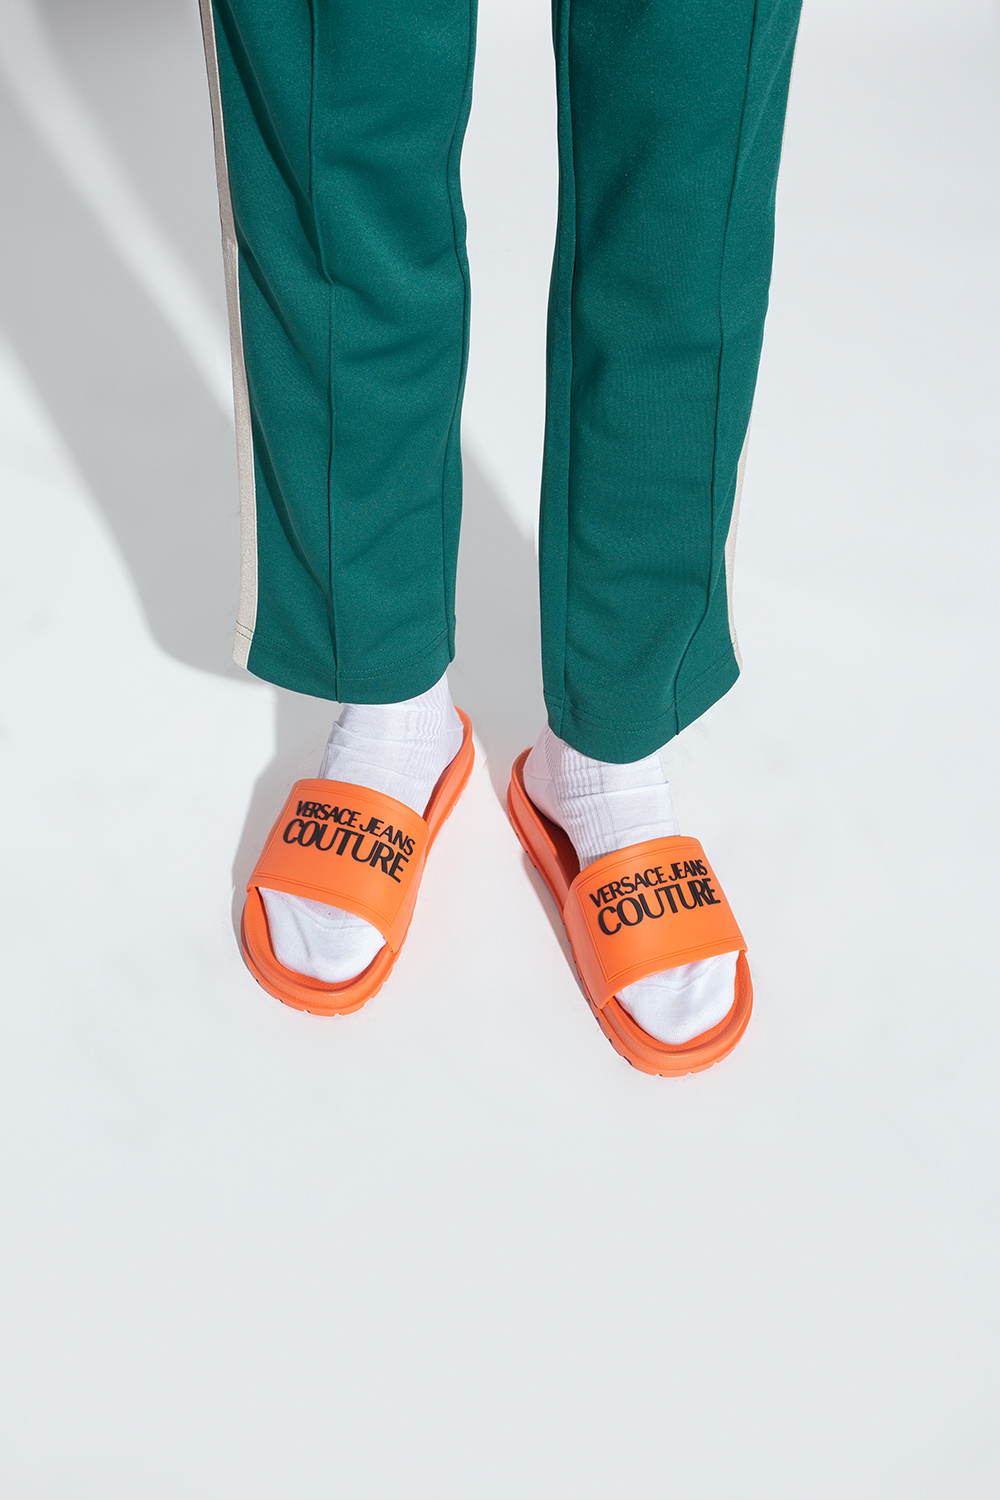 Versace Jeans Couture zapatillas de running mujer talla 43.5 naranjas